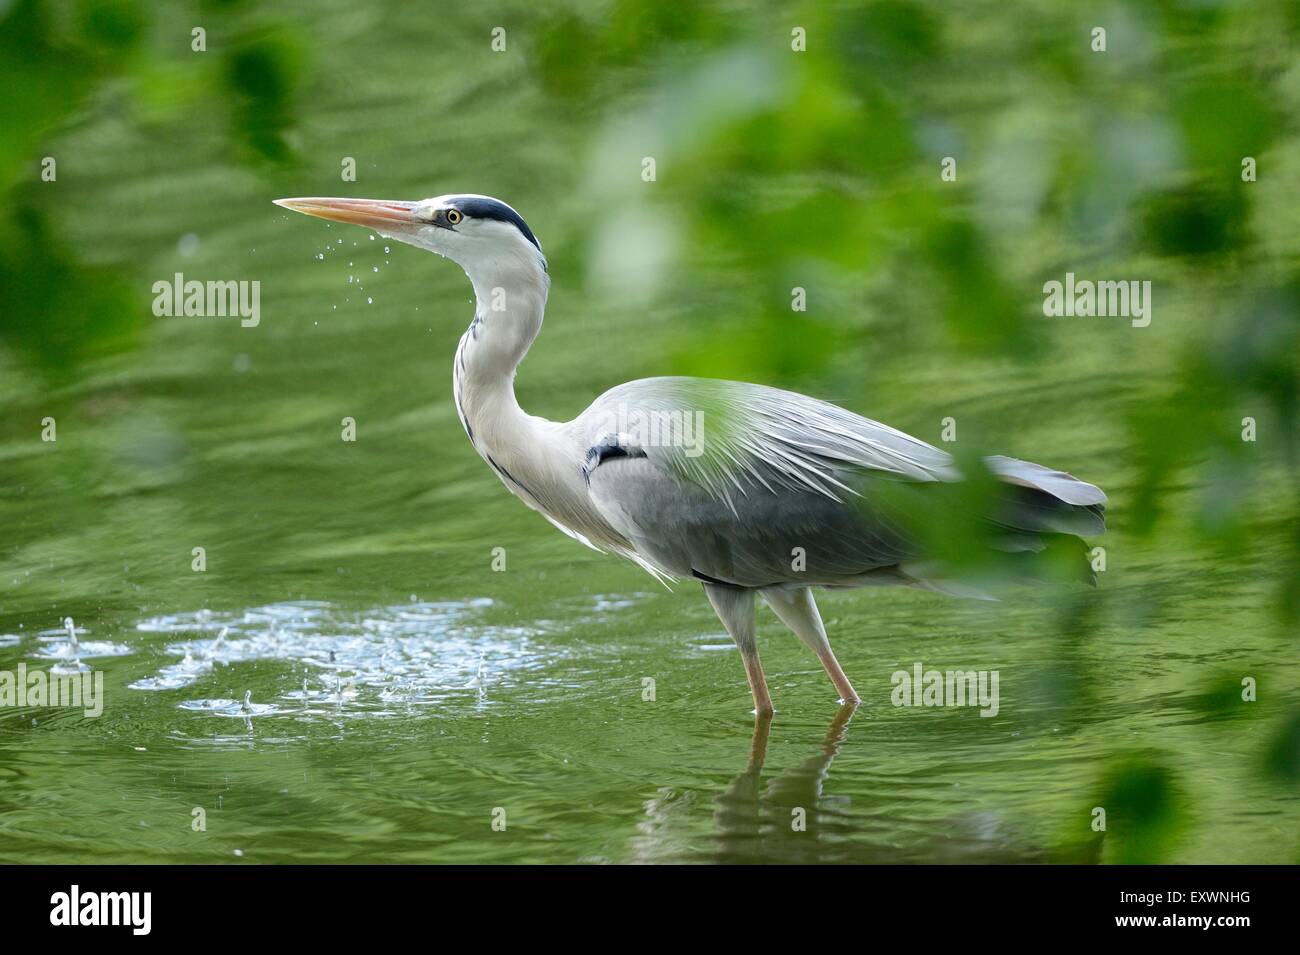 Gray heron standing in water Stock Photo